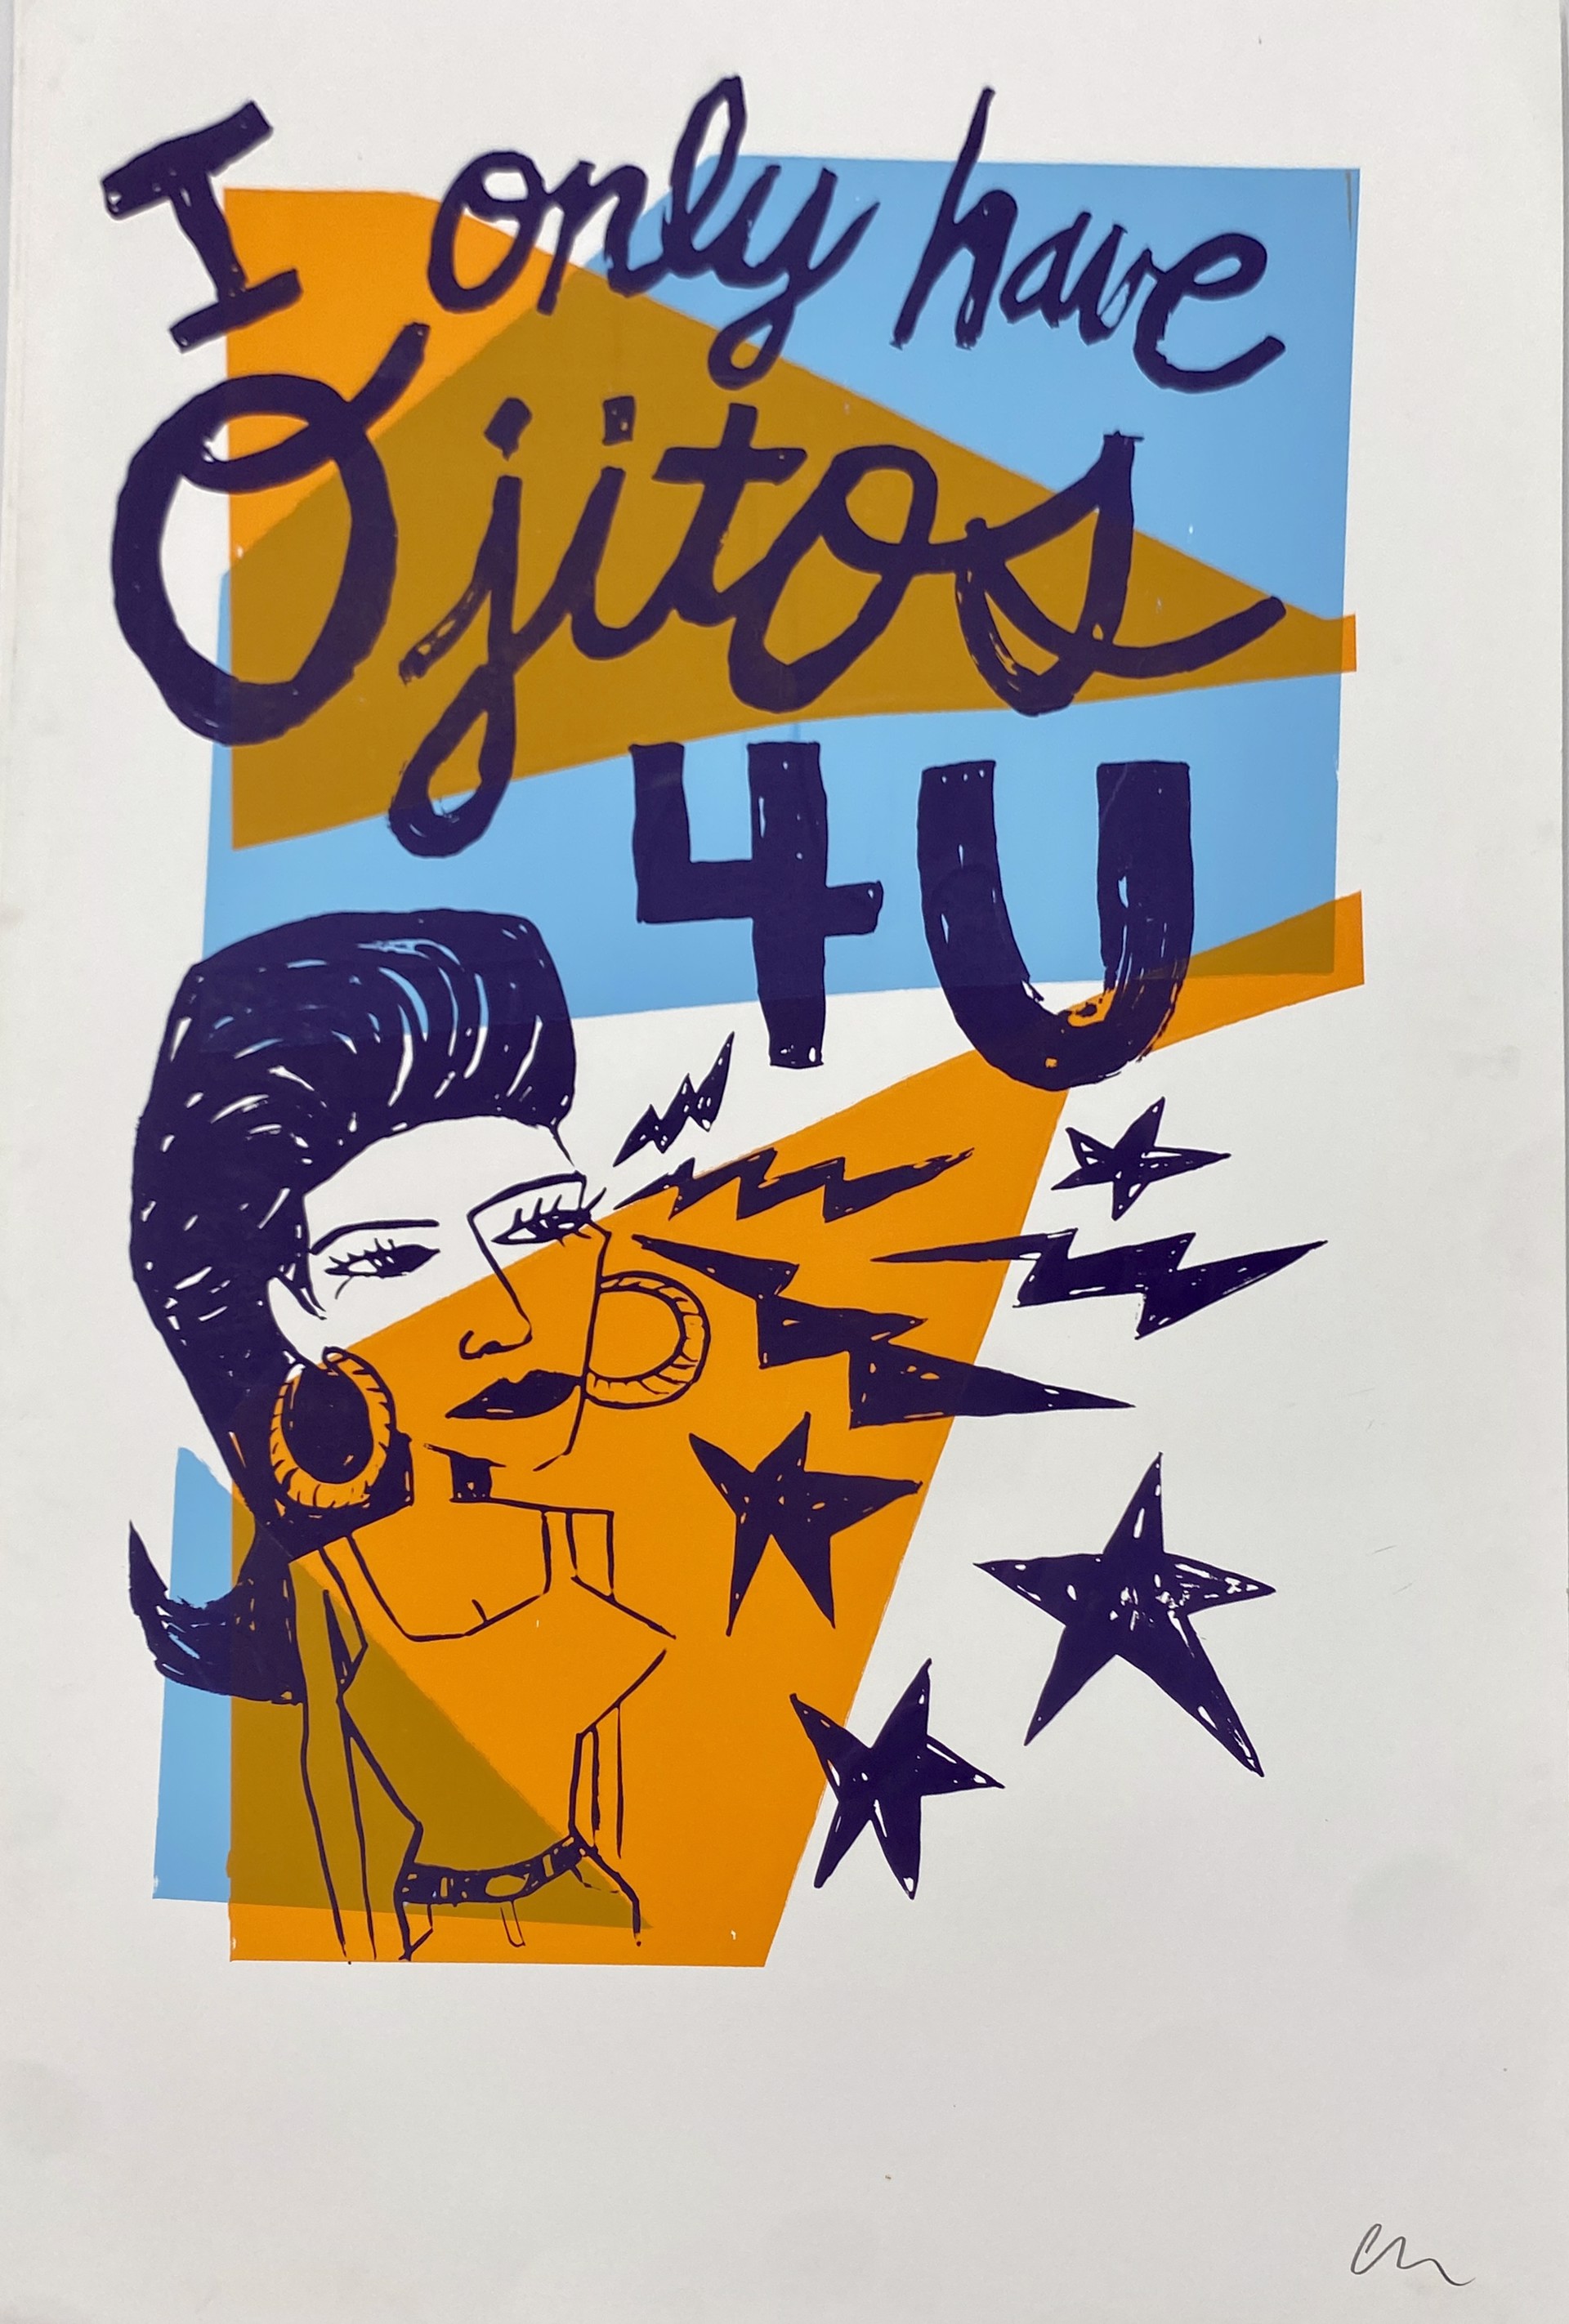 Ojitos 4 U by Cruz Ortiz